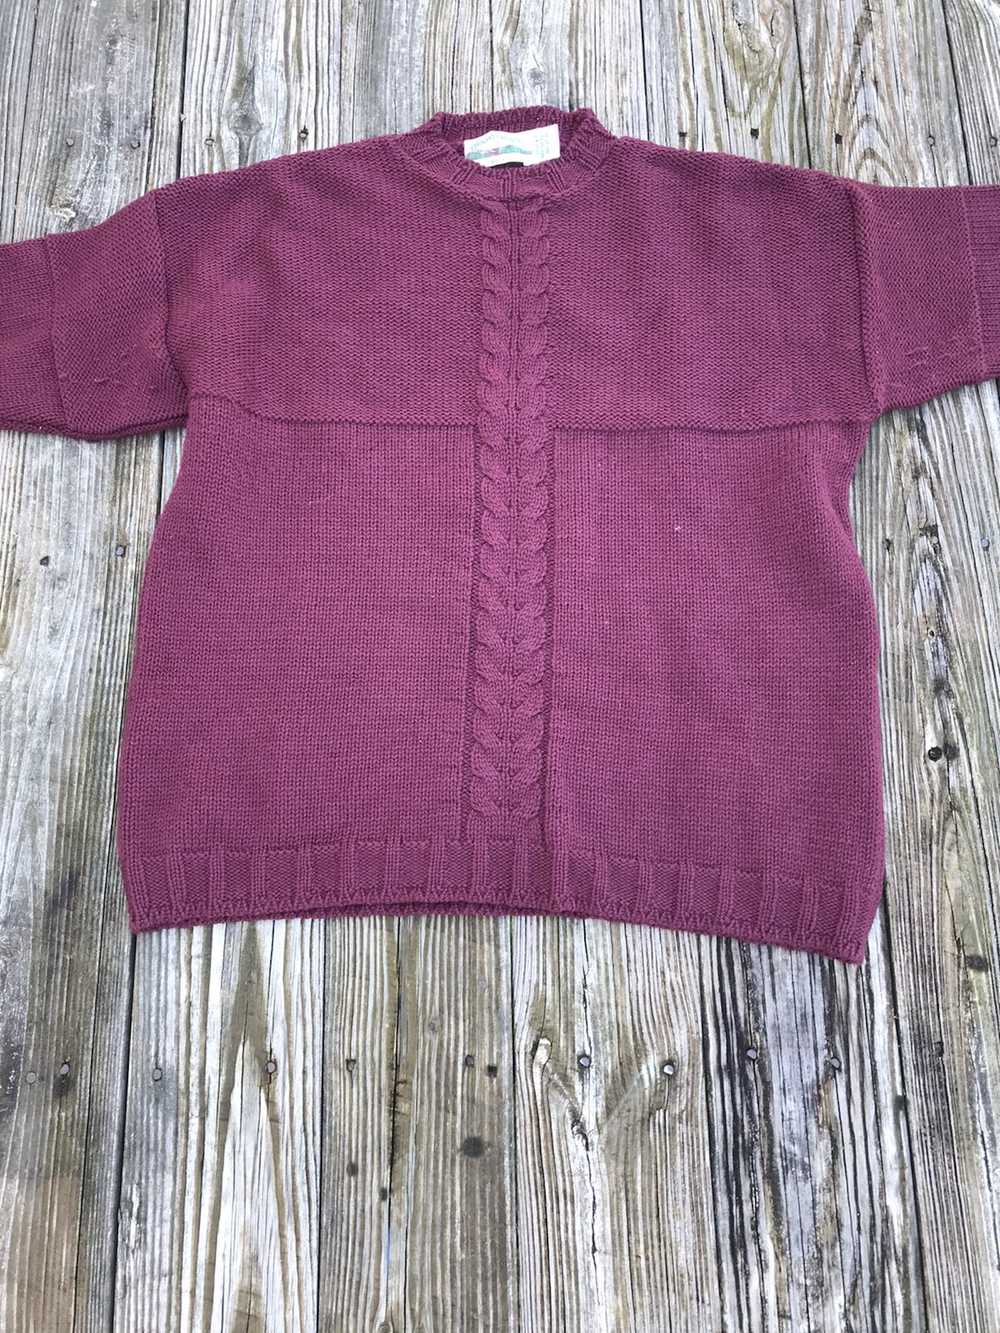 Aran Crafts × Vintage Maroon Crewneck Sweater wit… - image 7